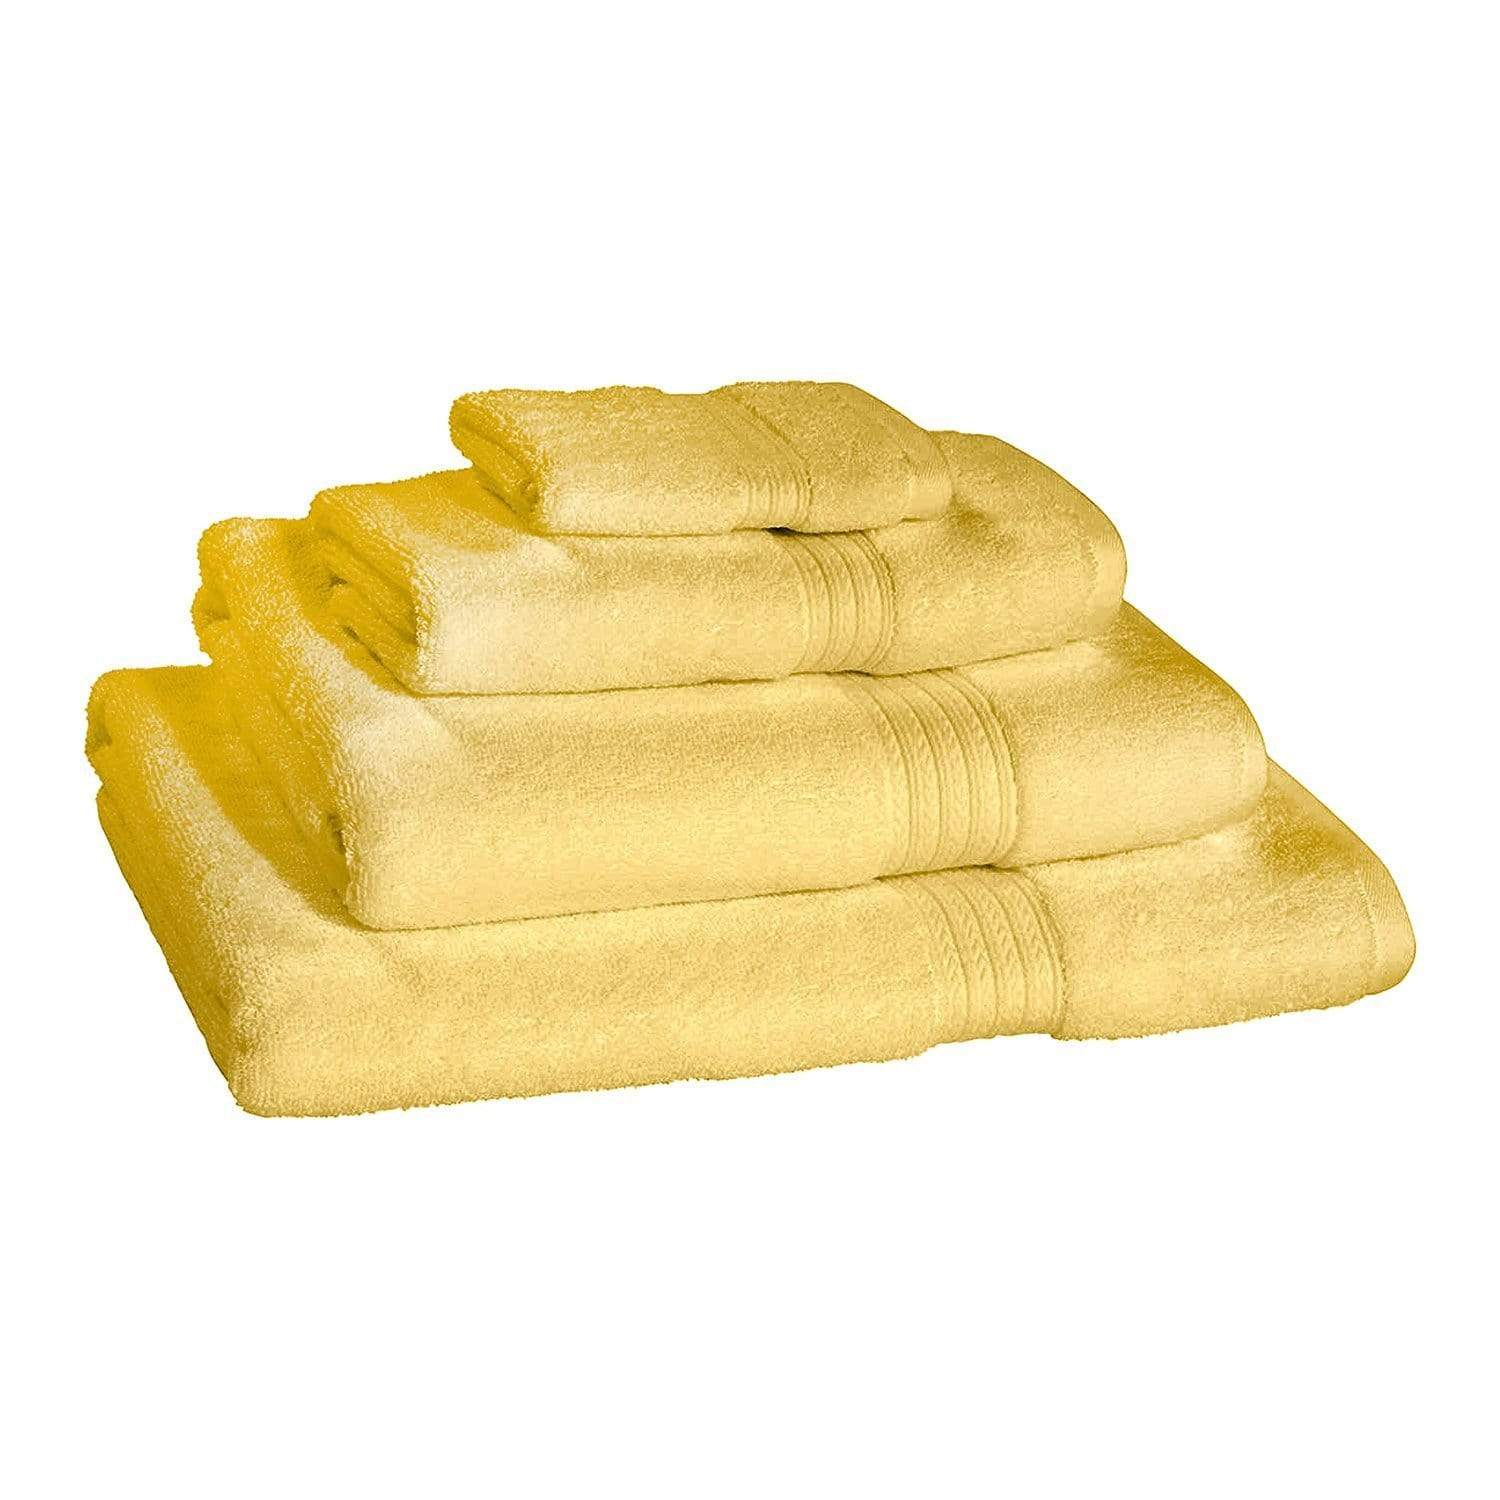 Kassatex Kassadesign Hand Towel - Pineapple - KDK-110-PNE - Jashanmal Home